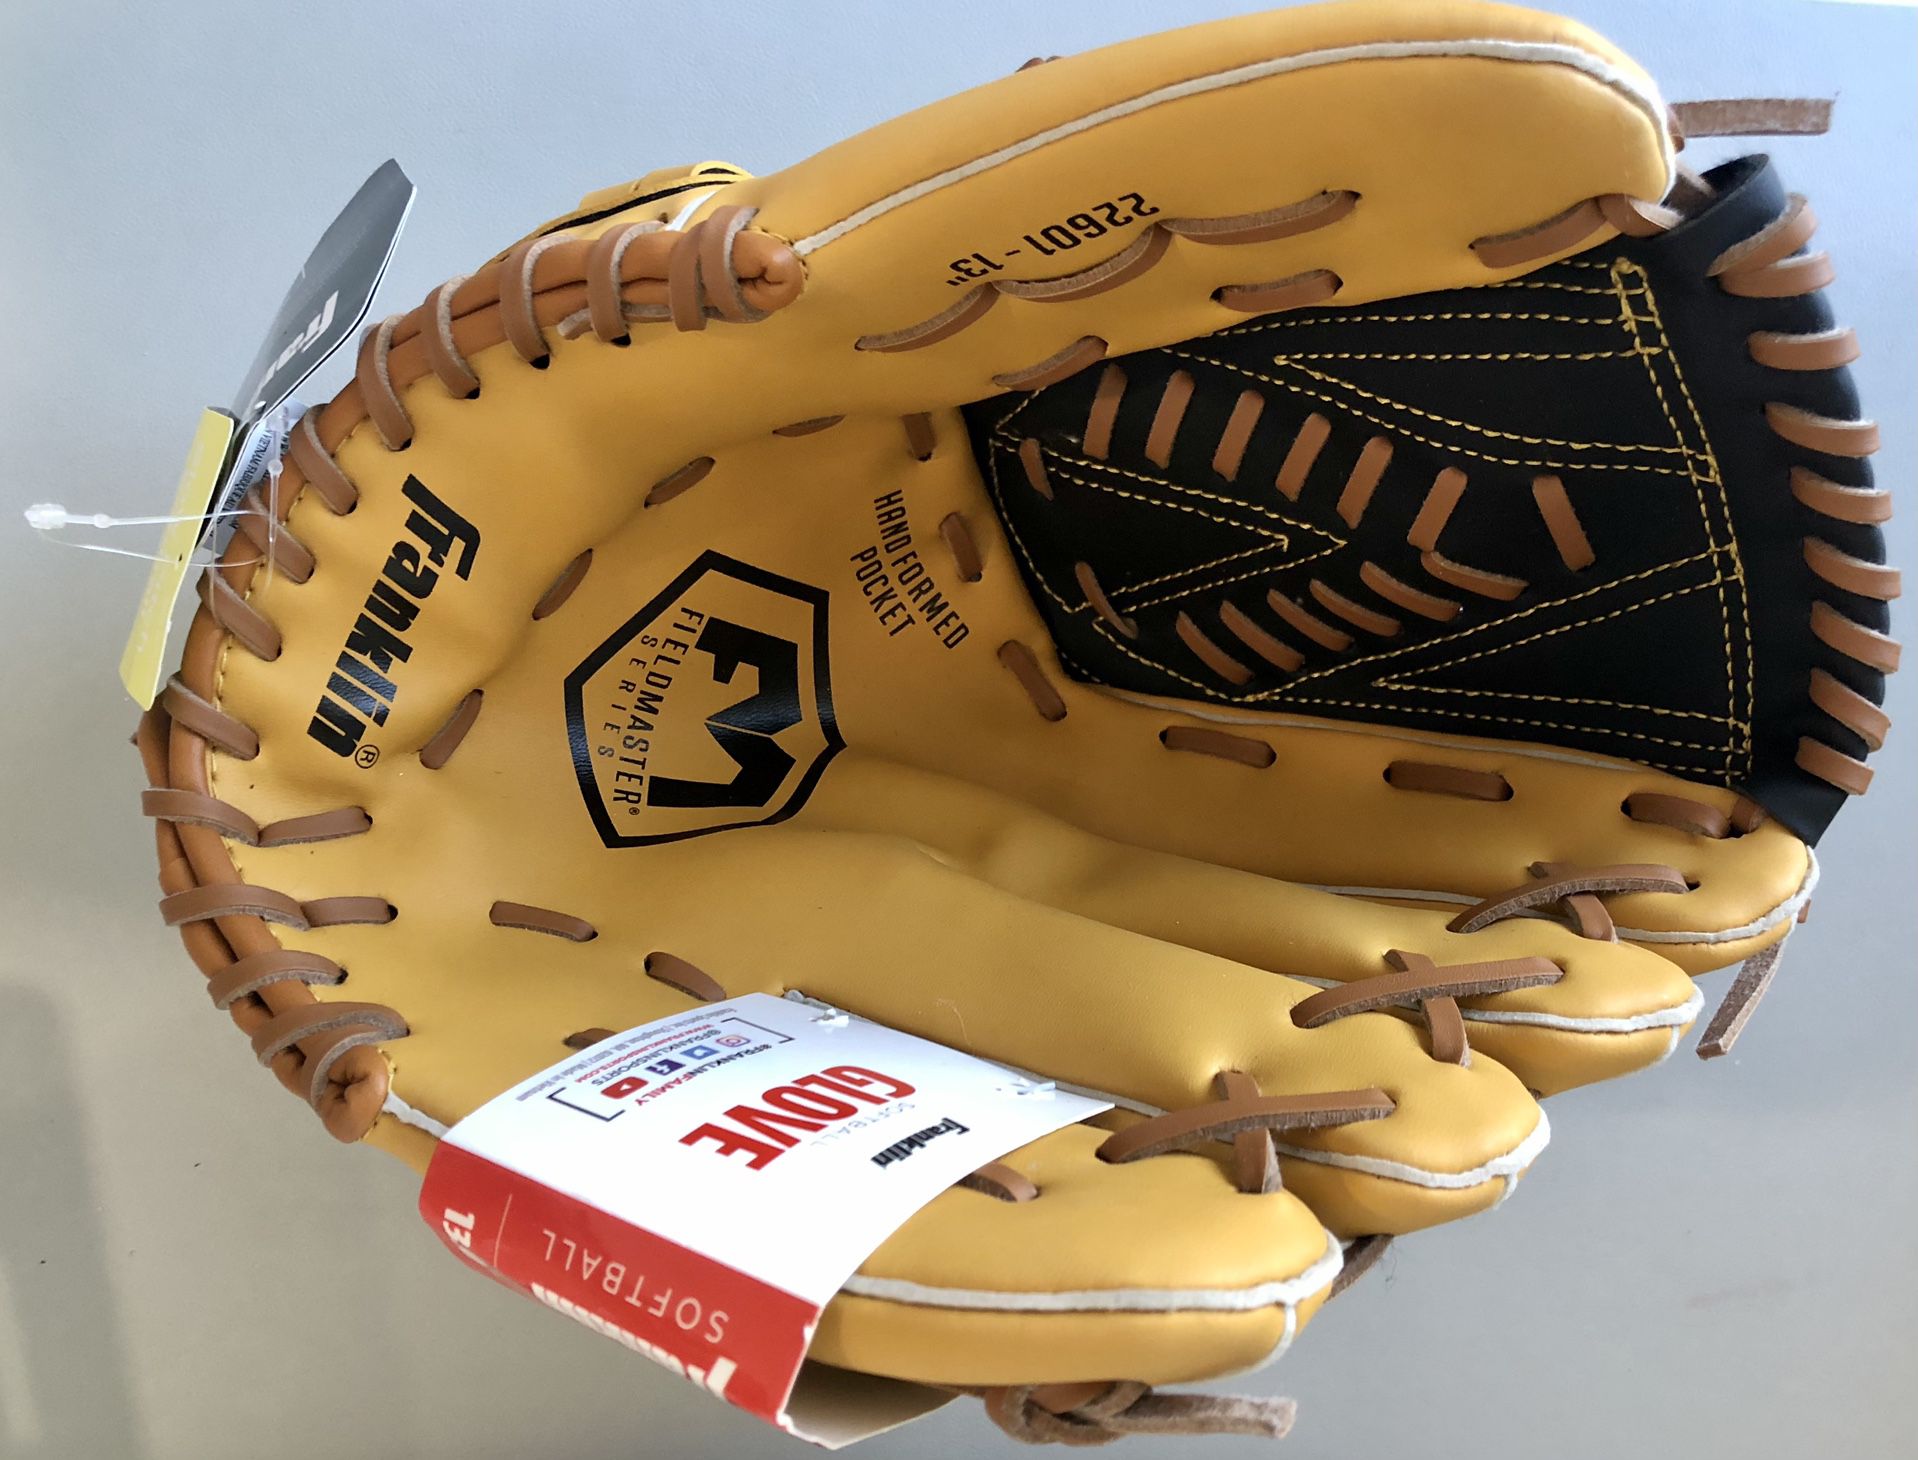 New Franklin Softball / Baseball Glove Mitt